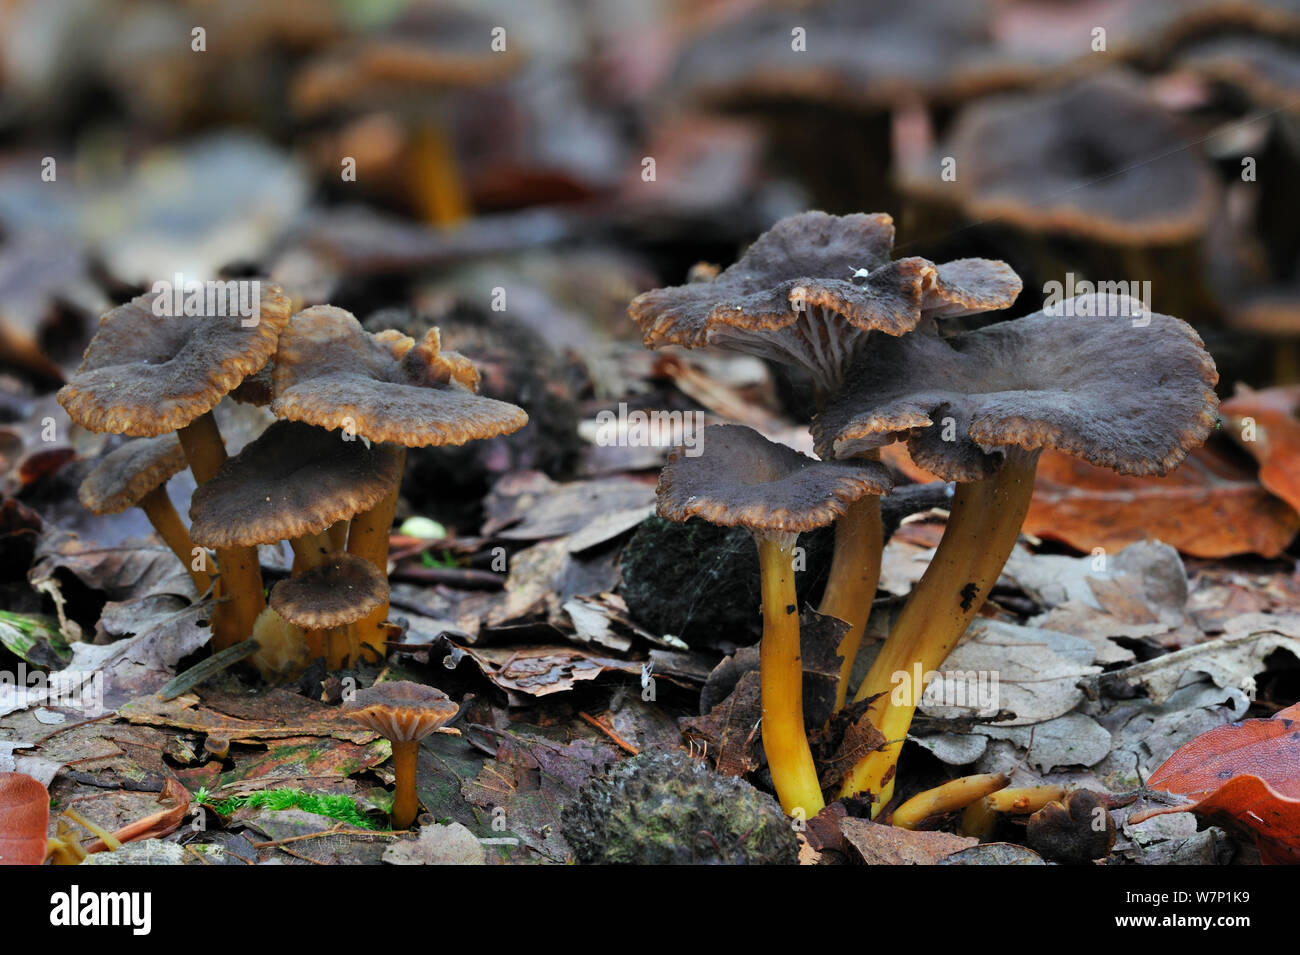 Trumpet chanterelle / Yellowfoot / Winter mushroom / Funnel Chanterelle (Cantharellus tubaeformis) growing in leaf litter on forest floor in autumn, Belgium, October Stock Photo